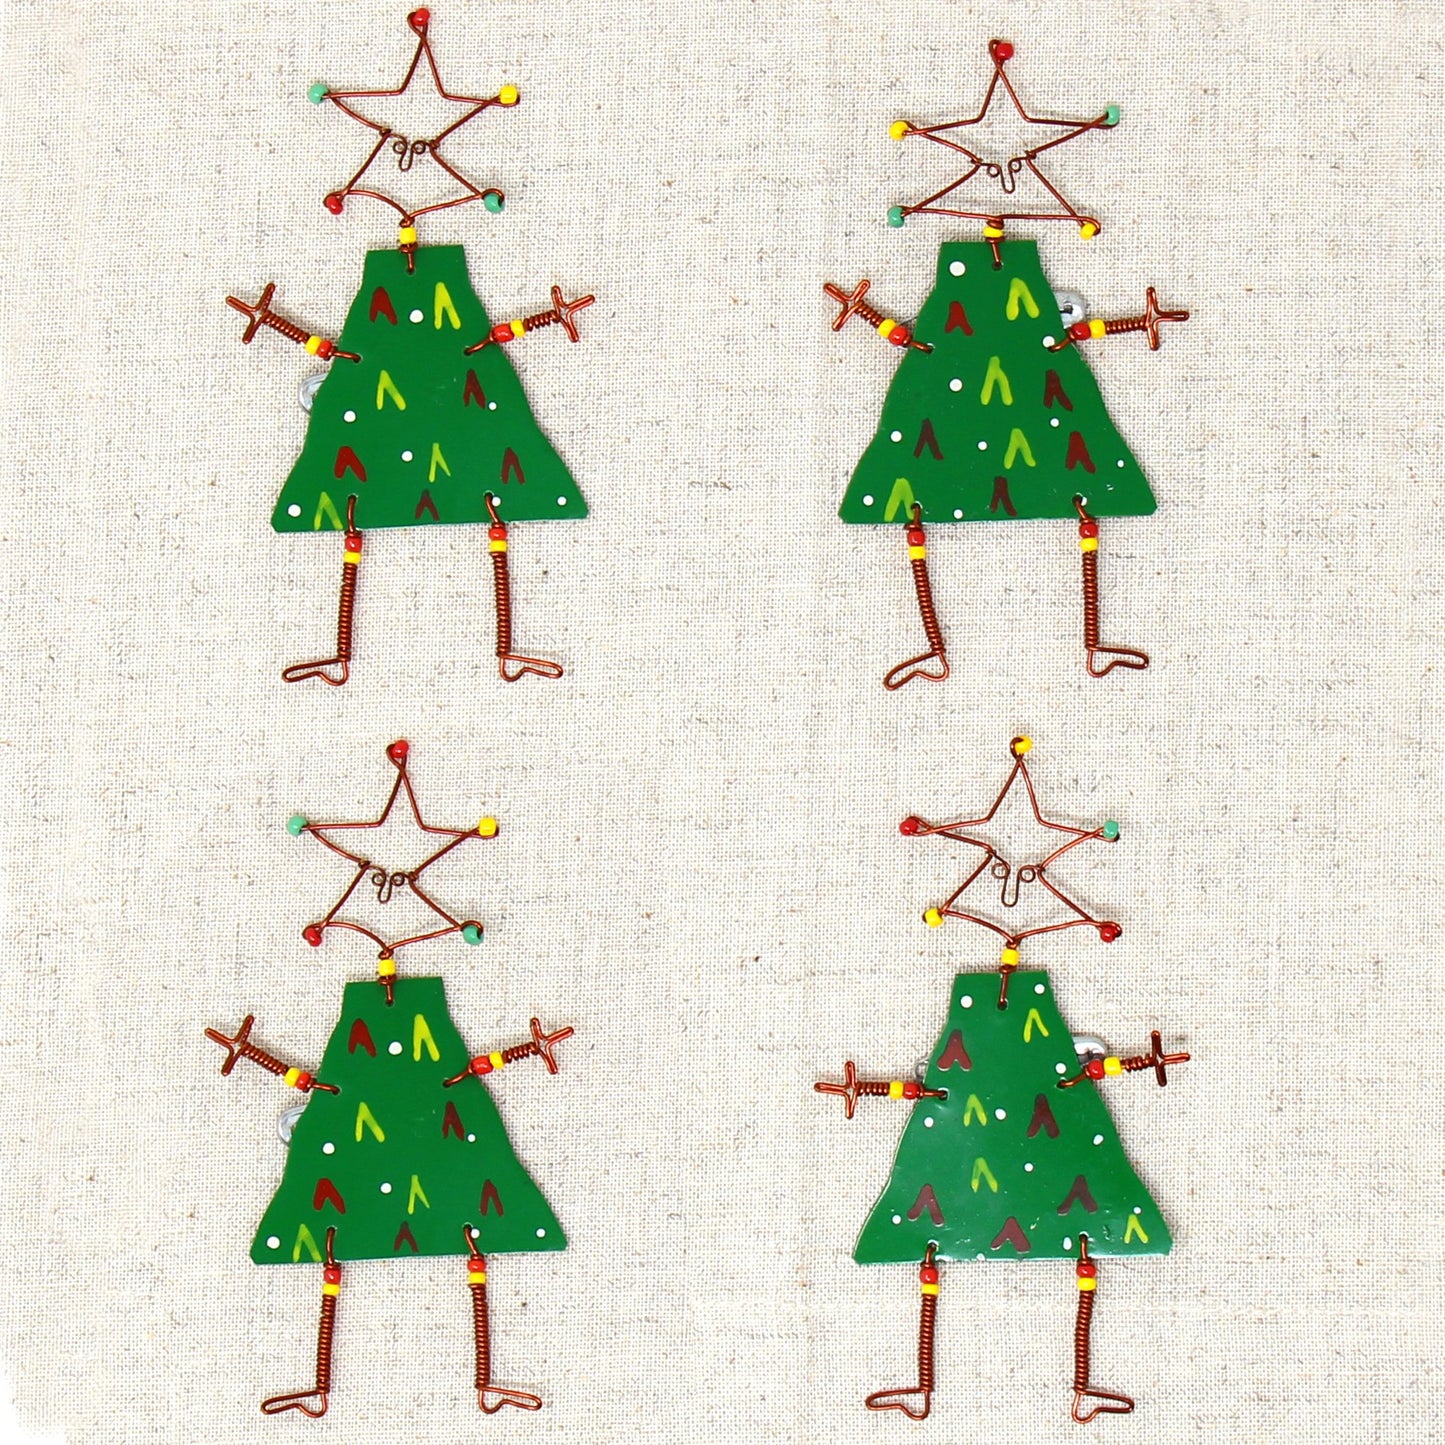 Dancing Girl Christmas Tree Pin - Creative Alternatives